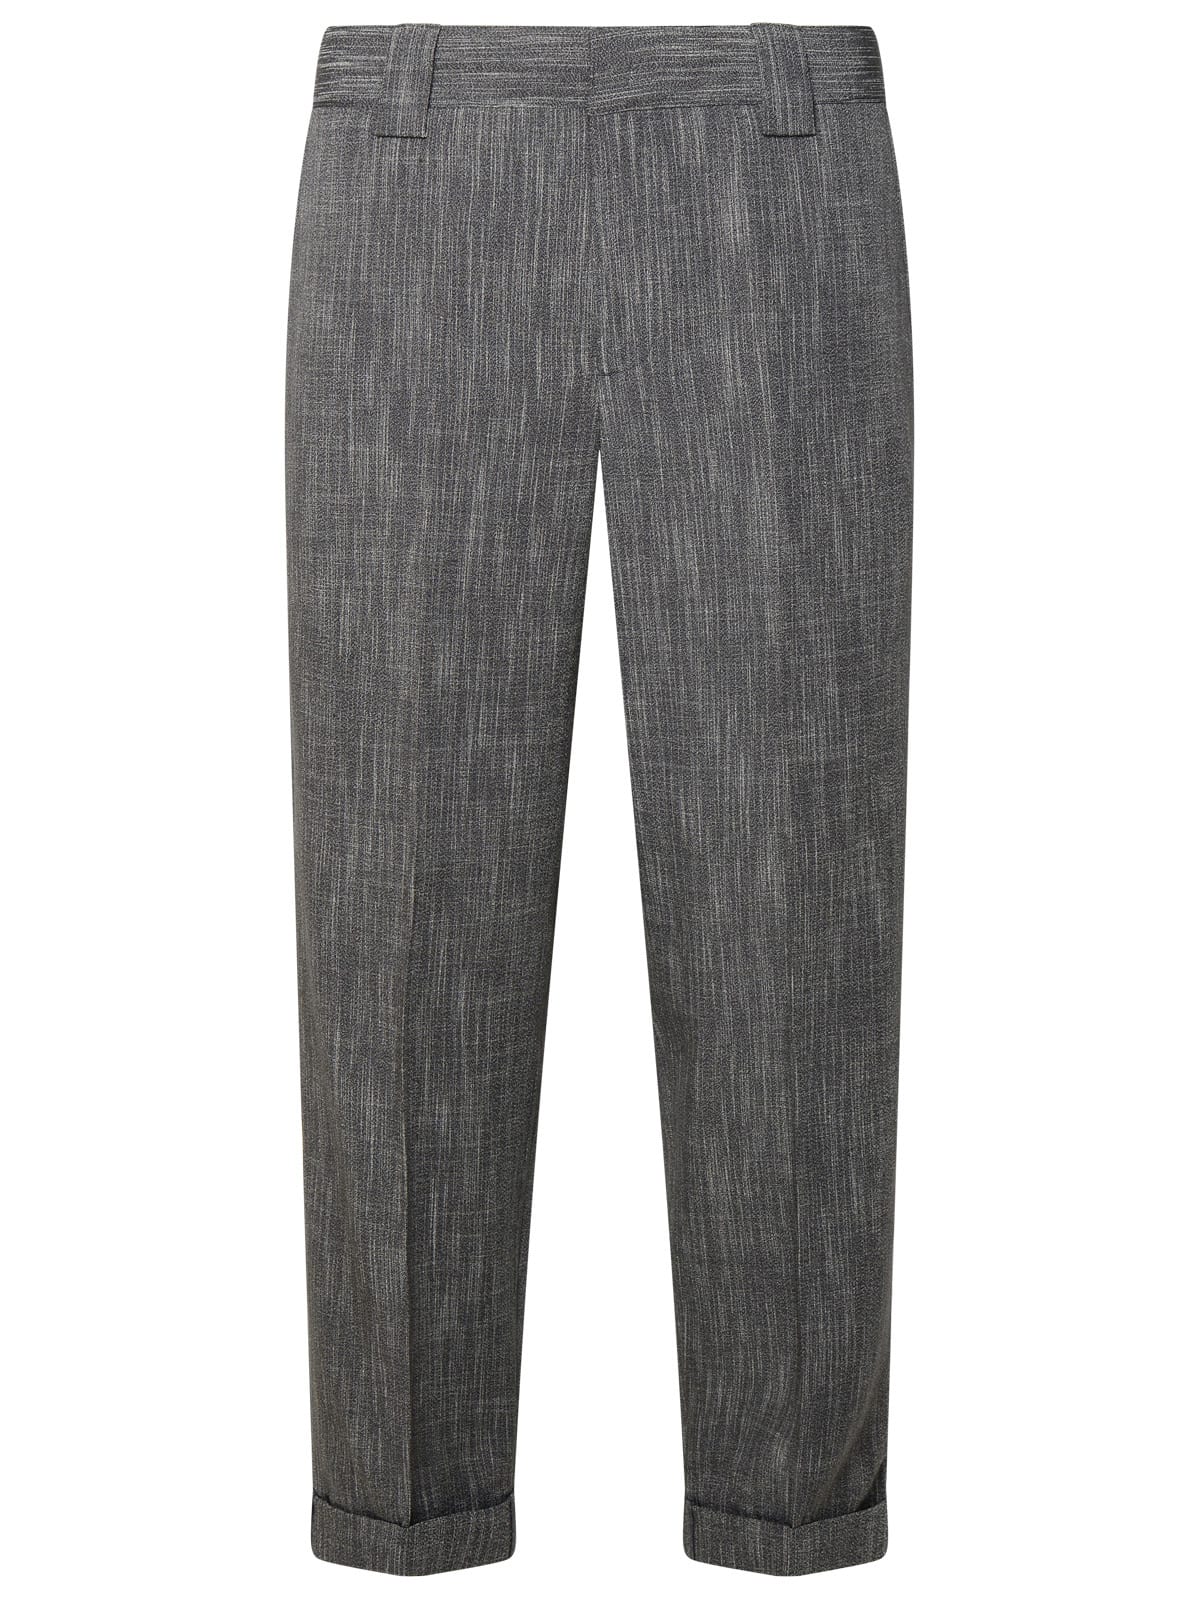 Grey Virgin Wool Blend Trousers